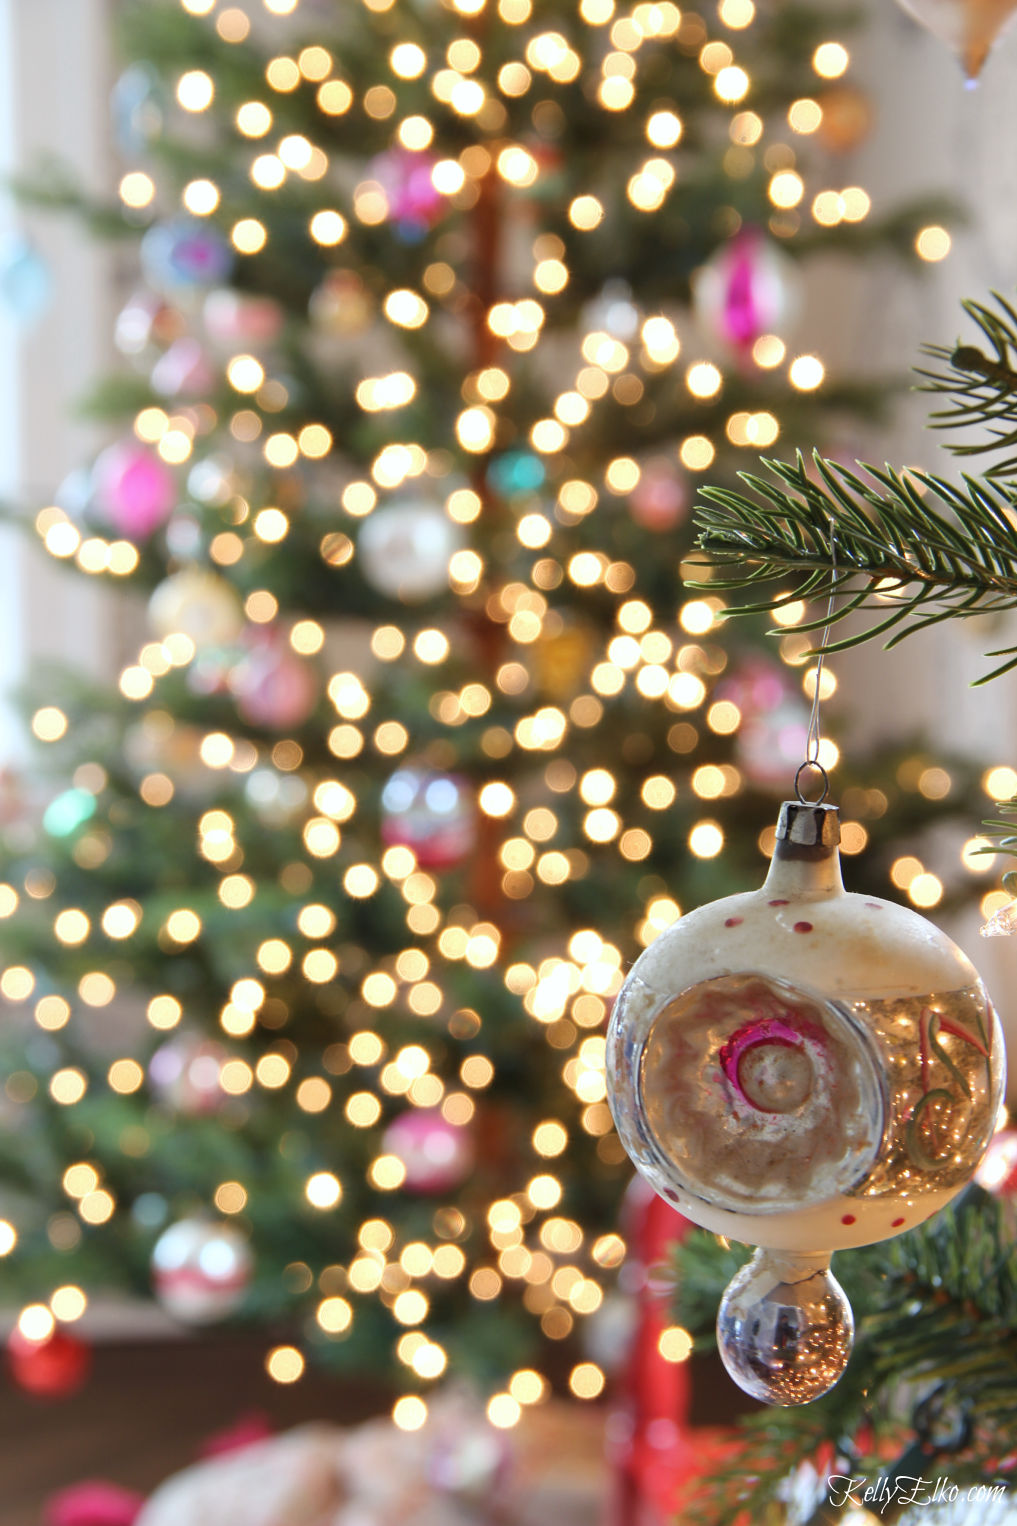 Vintage Shiny Brites fill this pair of Christmas trees kellyelko.com #vintagechristmas #shinybrites #christmasornaments #christmaslights #retrochristmas 